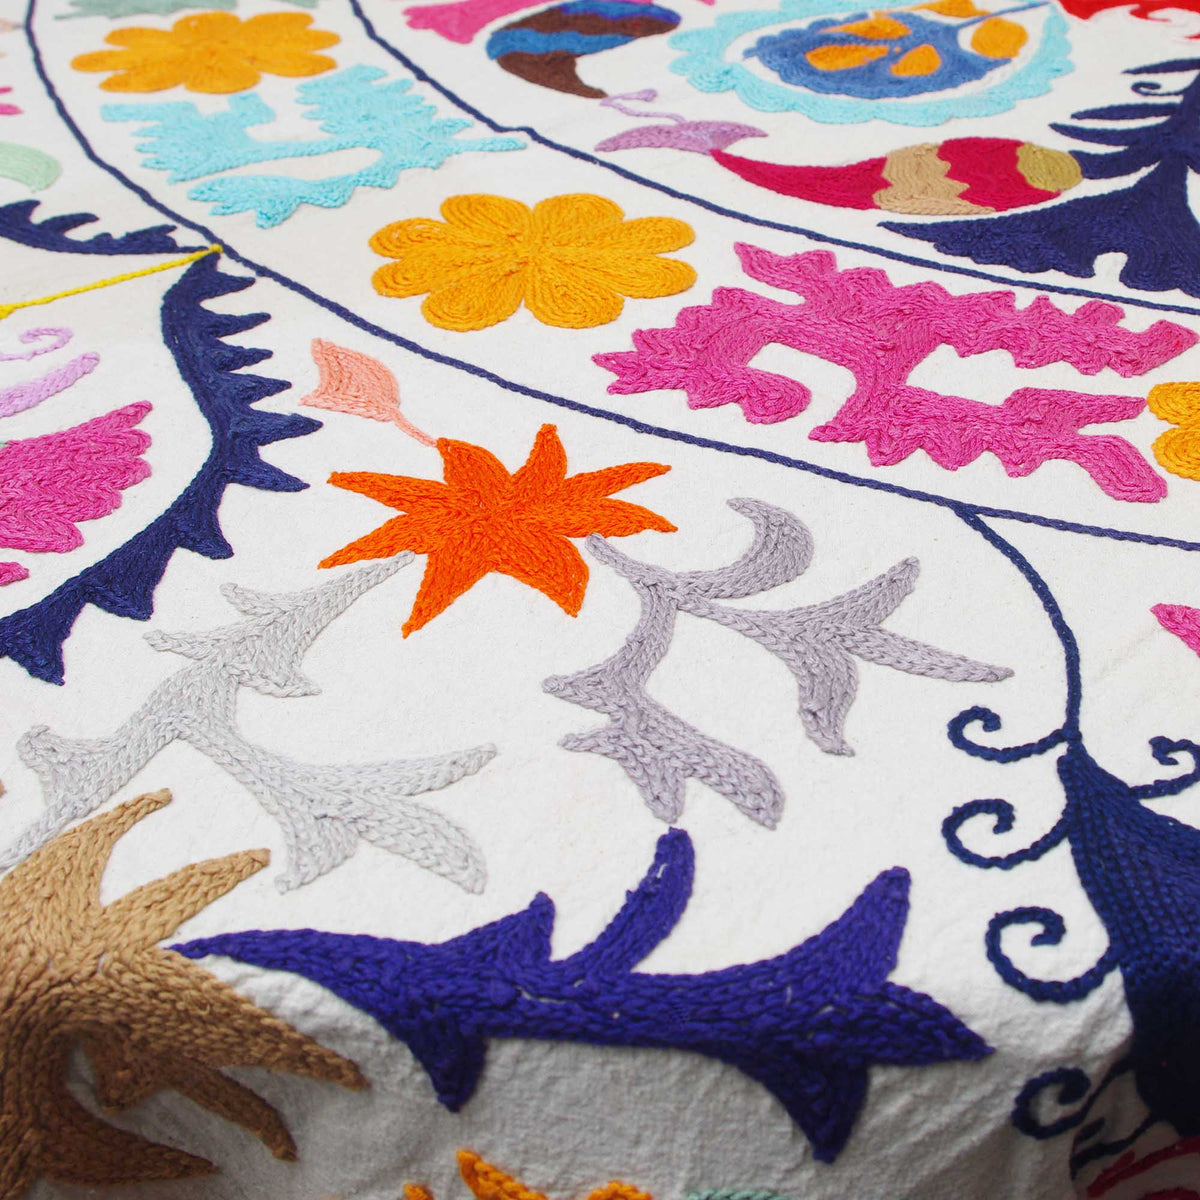 Uzbek Suzani Bedspread With Embroidery - Scarlet Floral